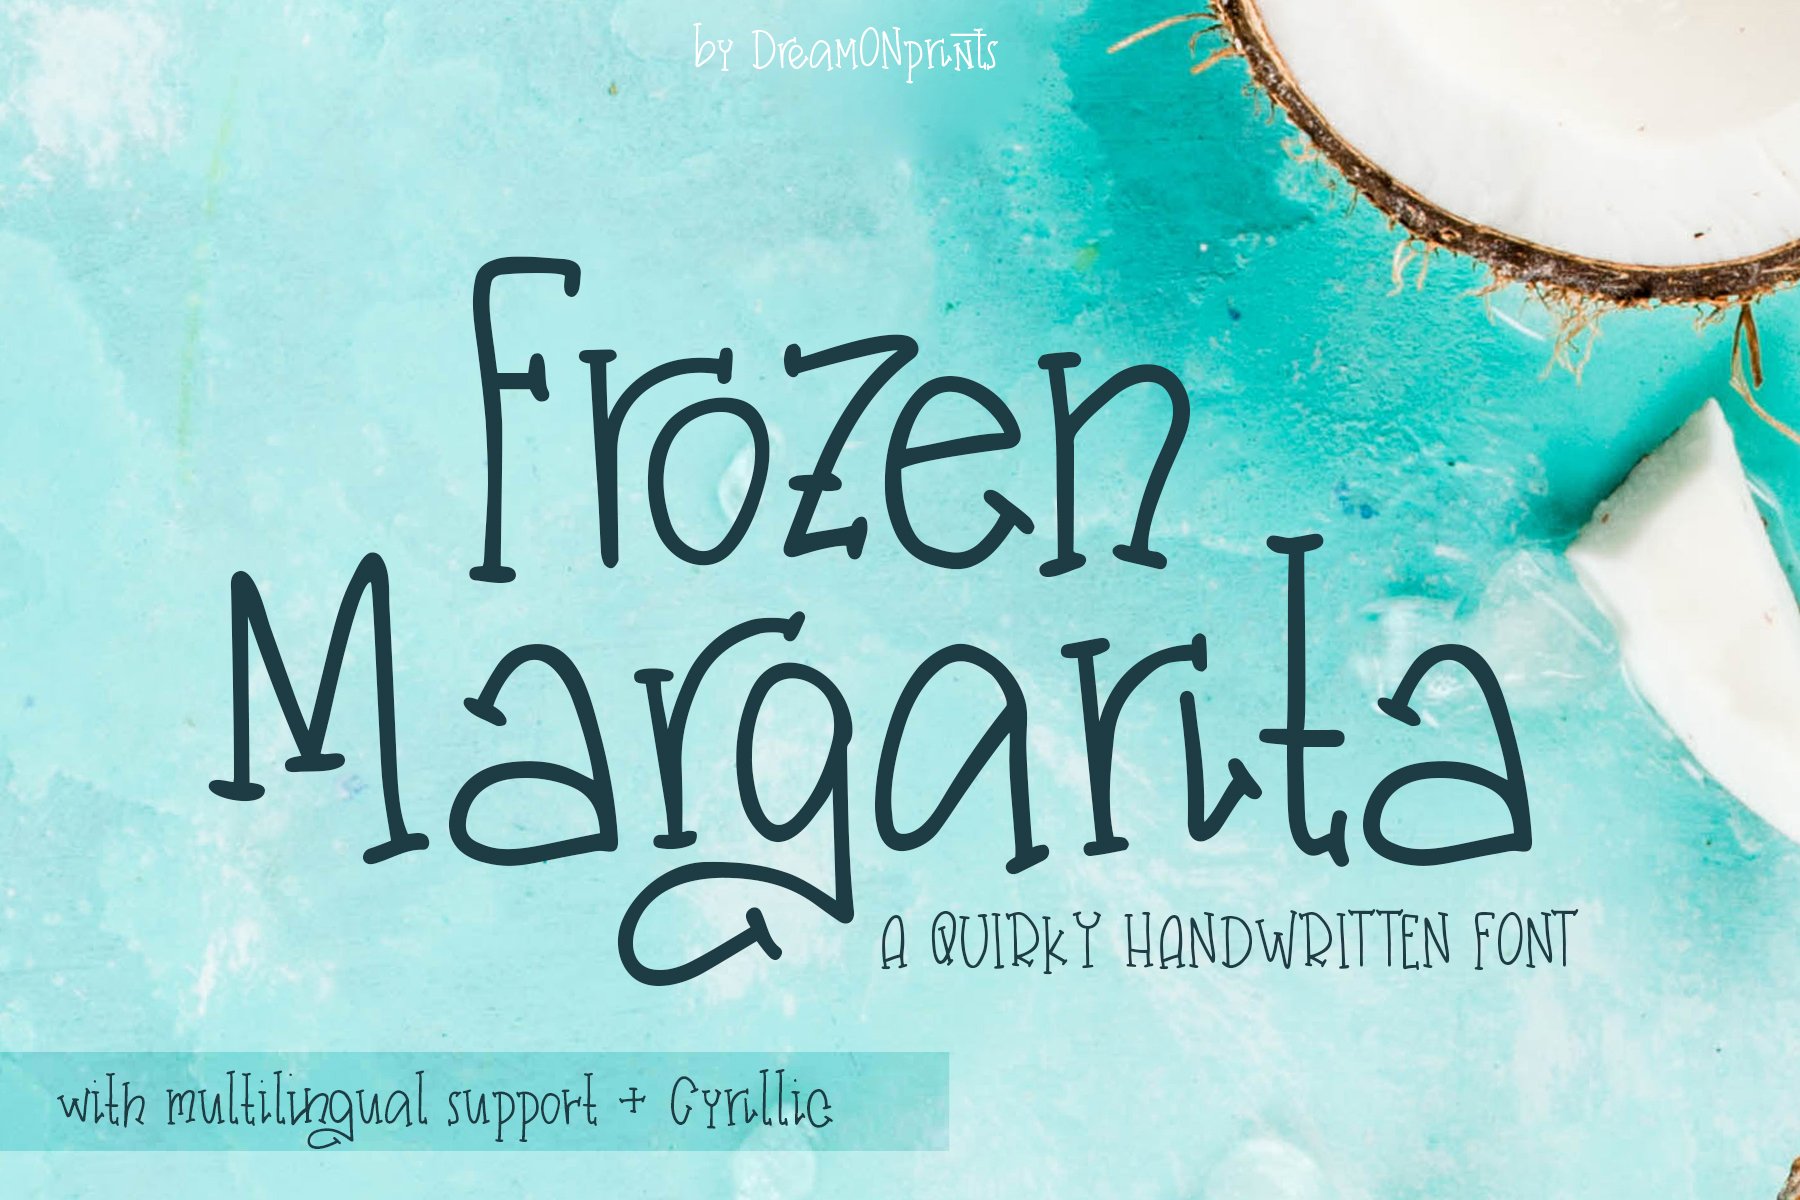 Frozen Margarita - Handwritten Font cover image.